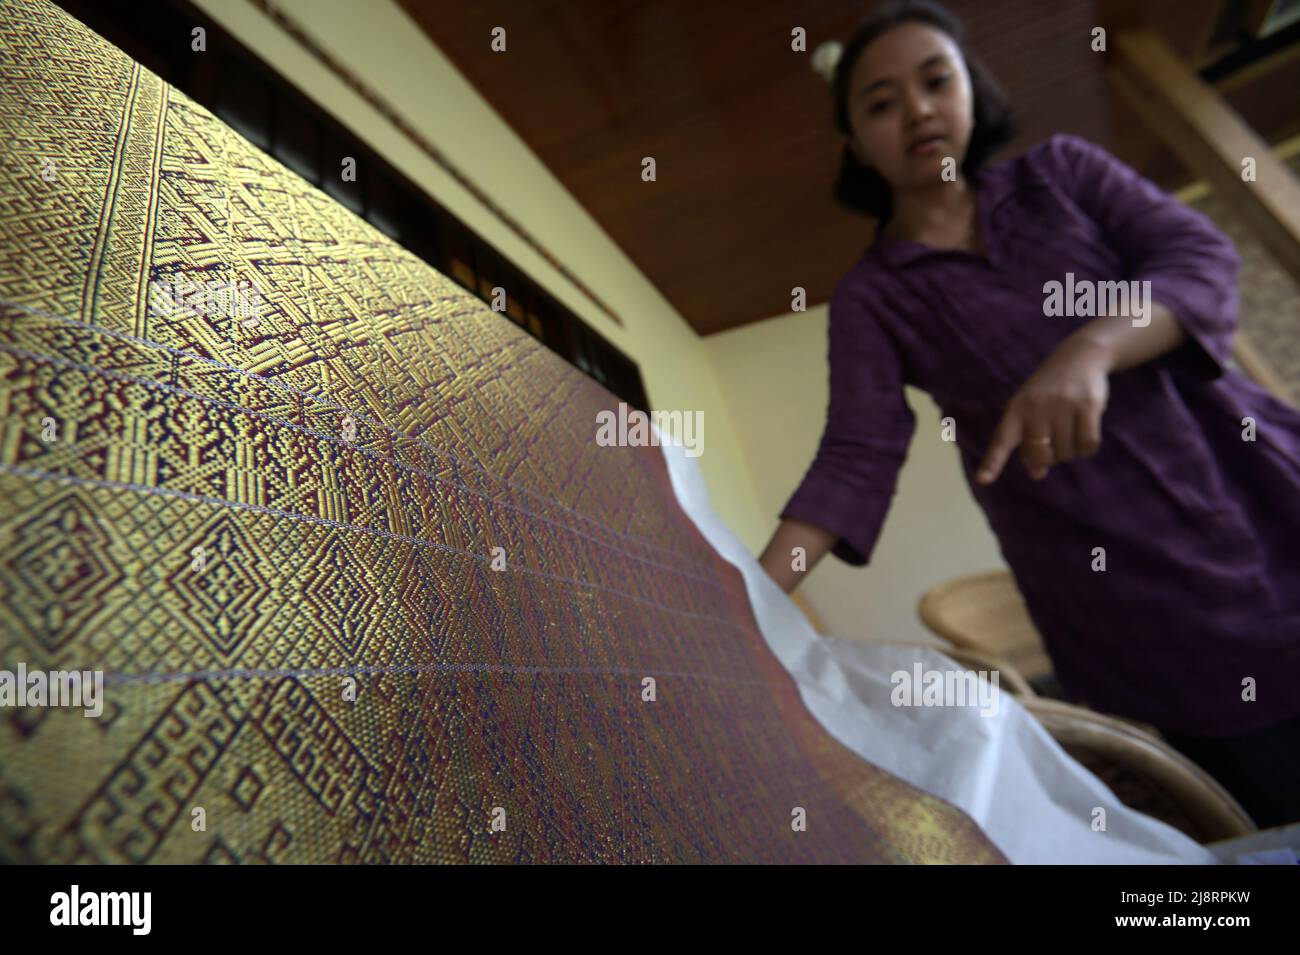 A high-profile songket fabric with golden yarn at Erika Rianti songket studio in Bukittinggi, West Sumatra, Indonesia. Stock Photo